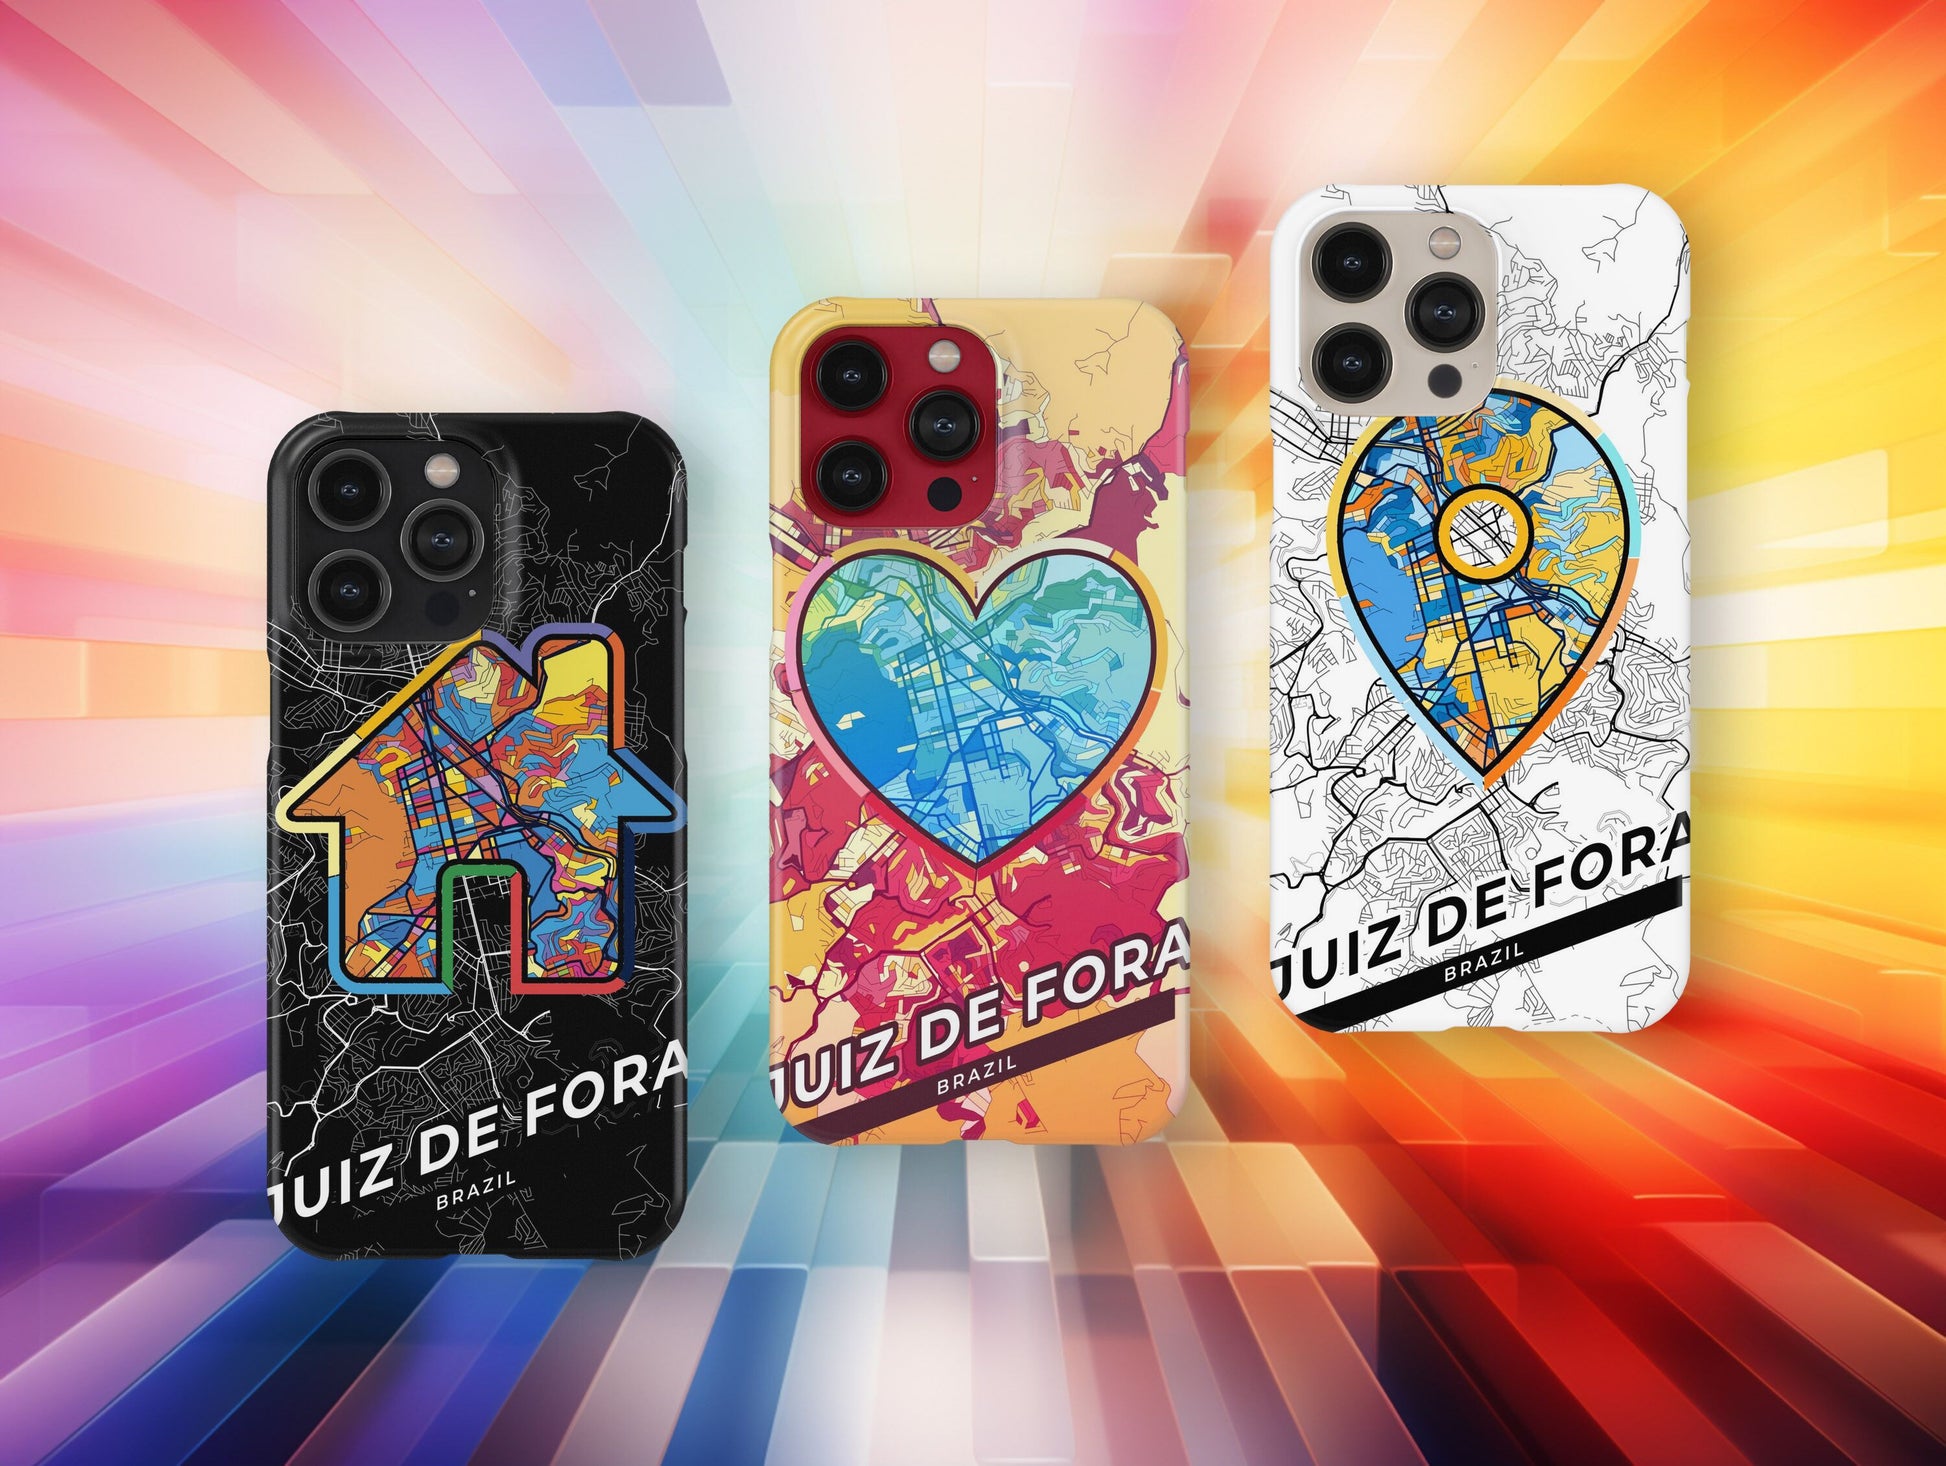 Juiz De Fora Brazil slim phone case with colorful icon. Birthday, wedding or housewarming gift. Couple match cases.